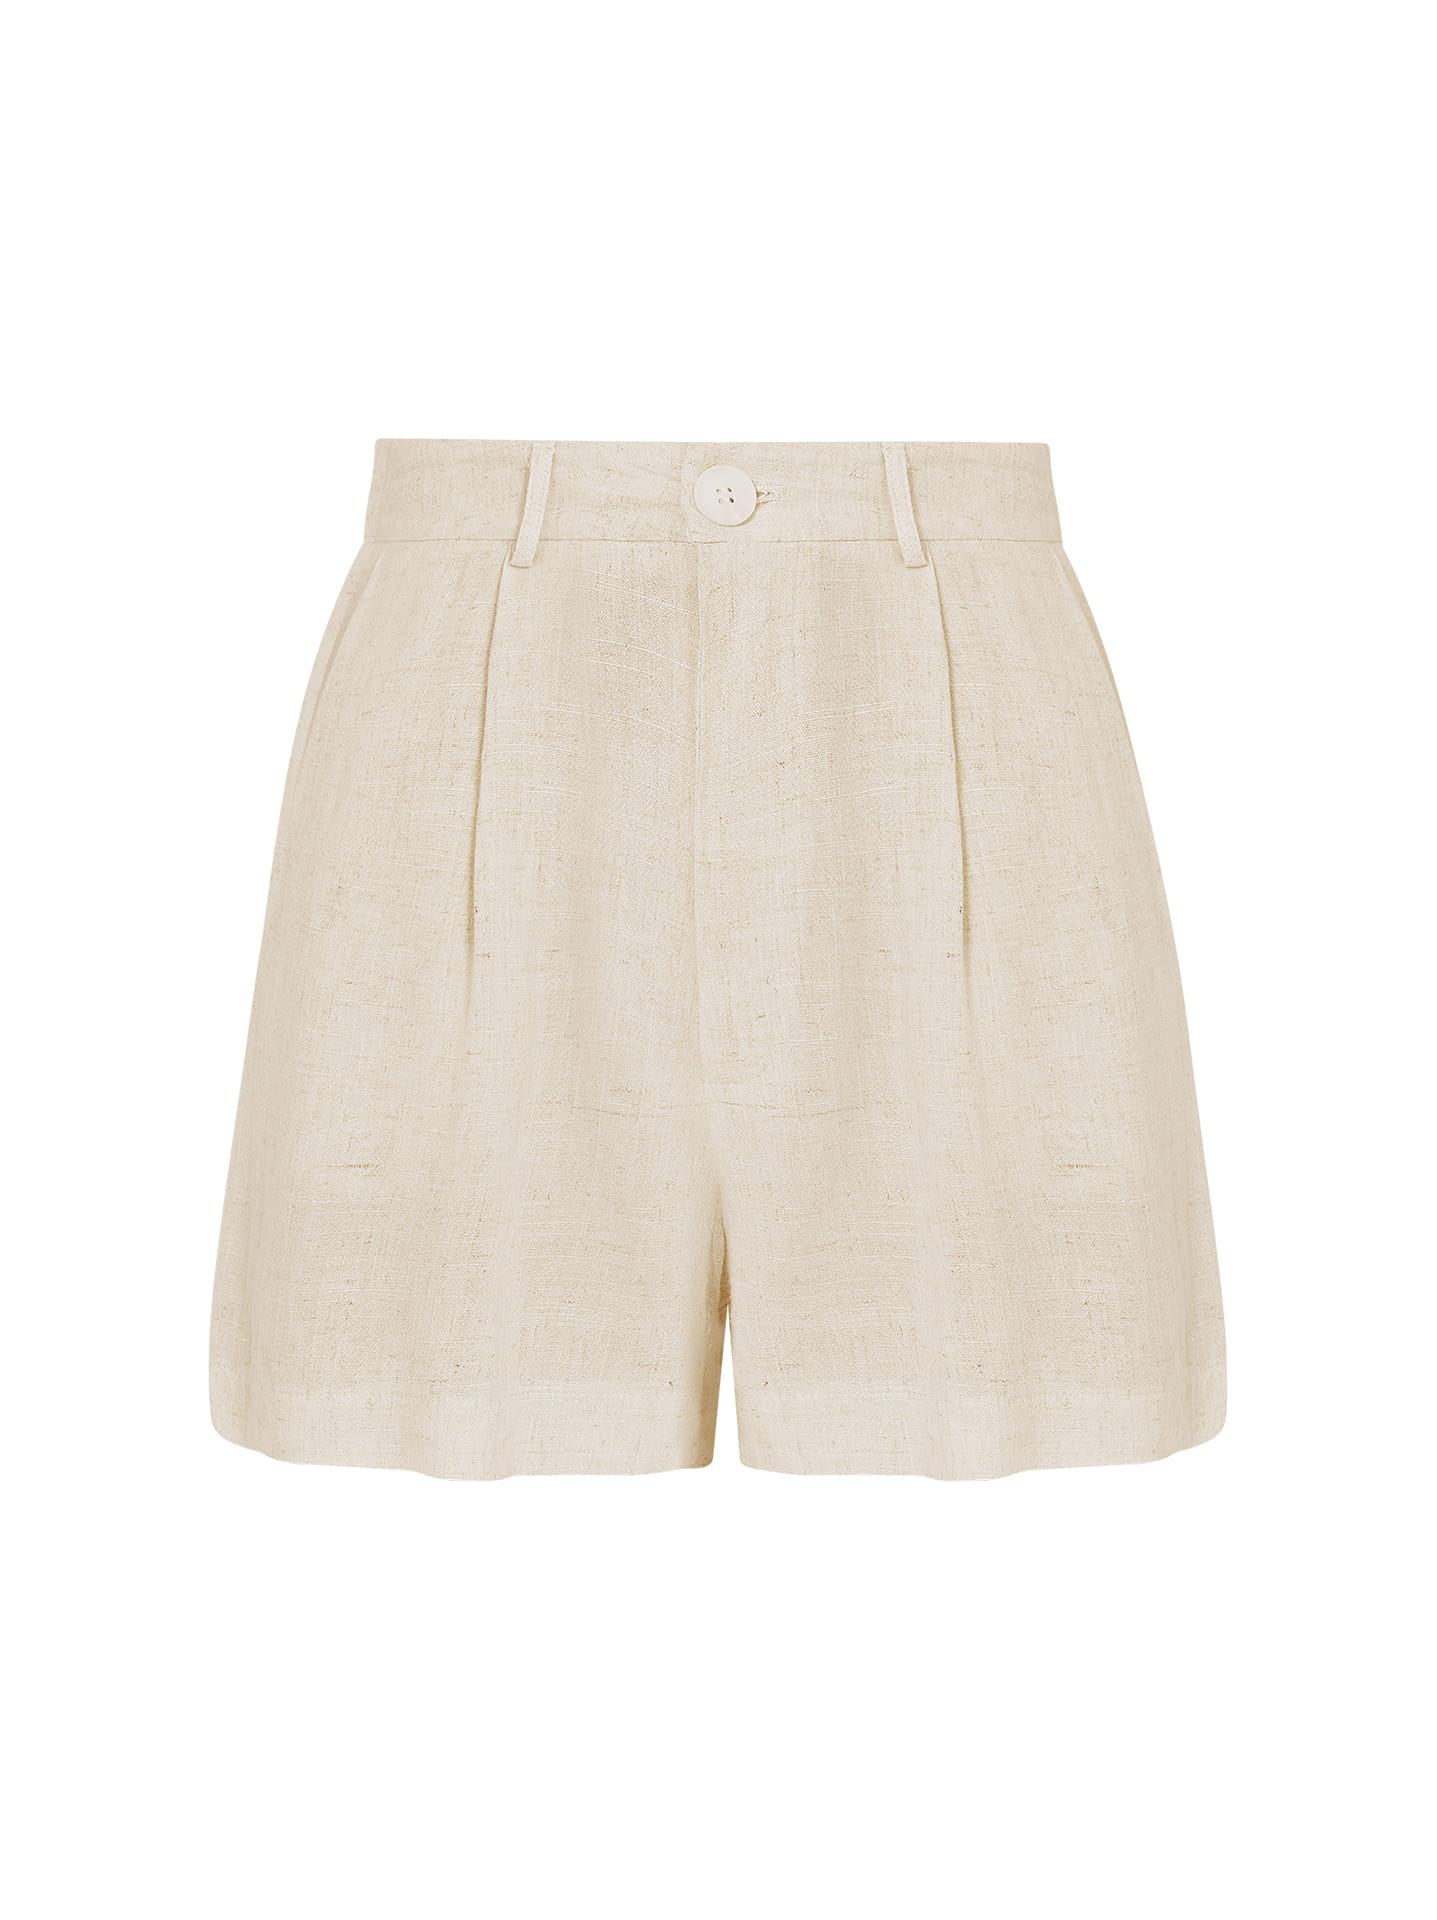 Quince linen shorts in Drift Wood (beige). Size S, - Depop